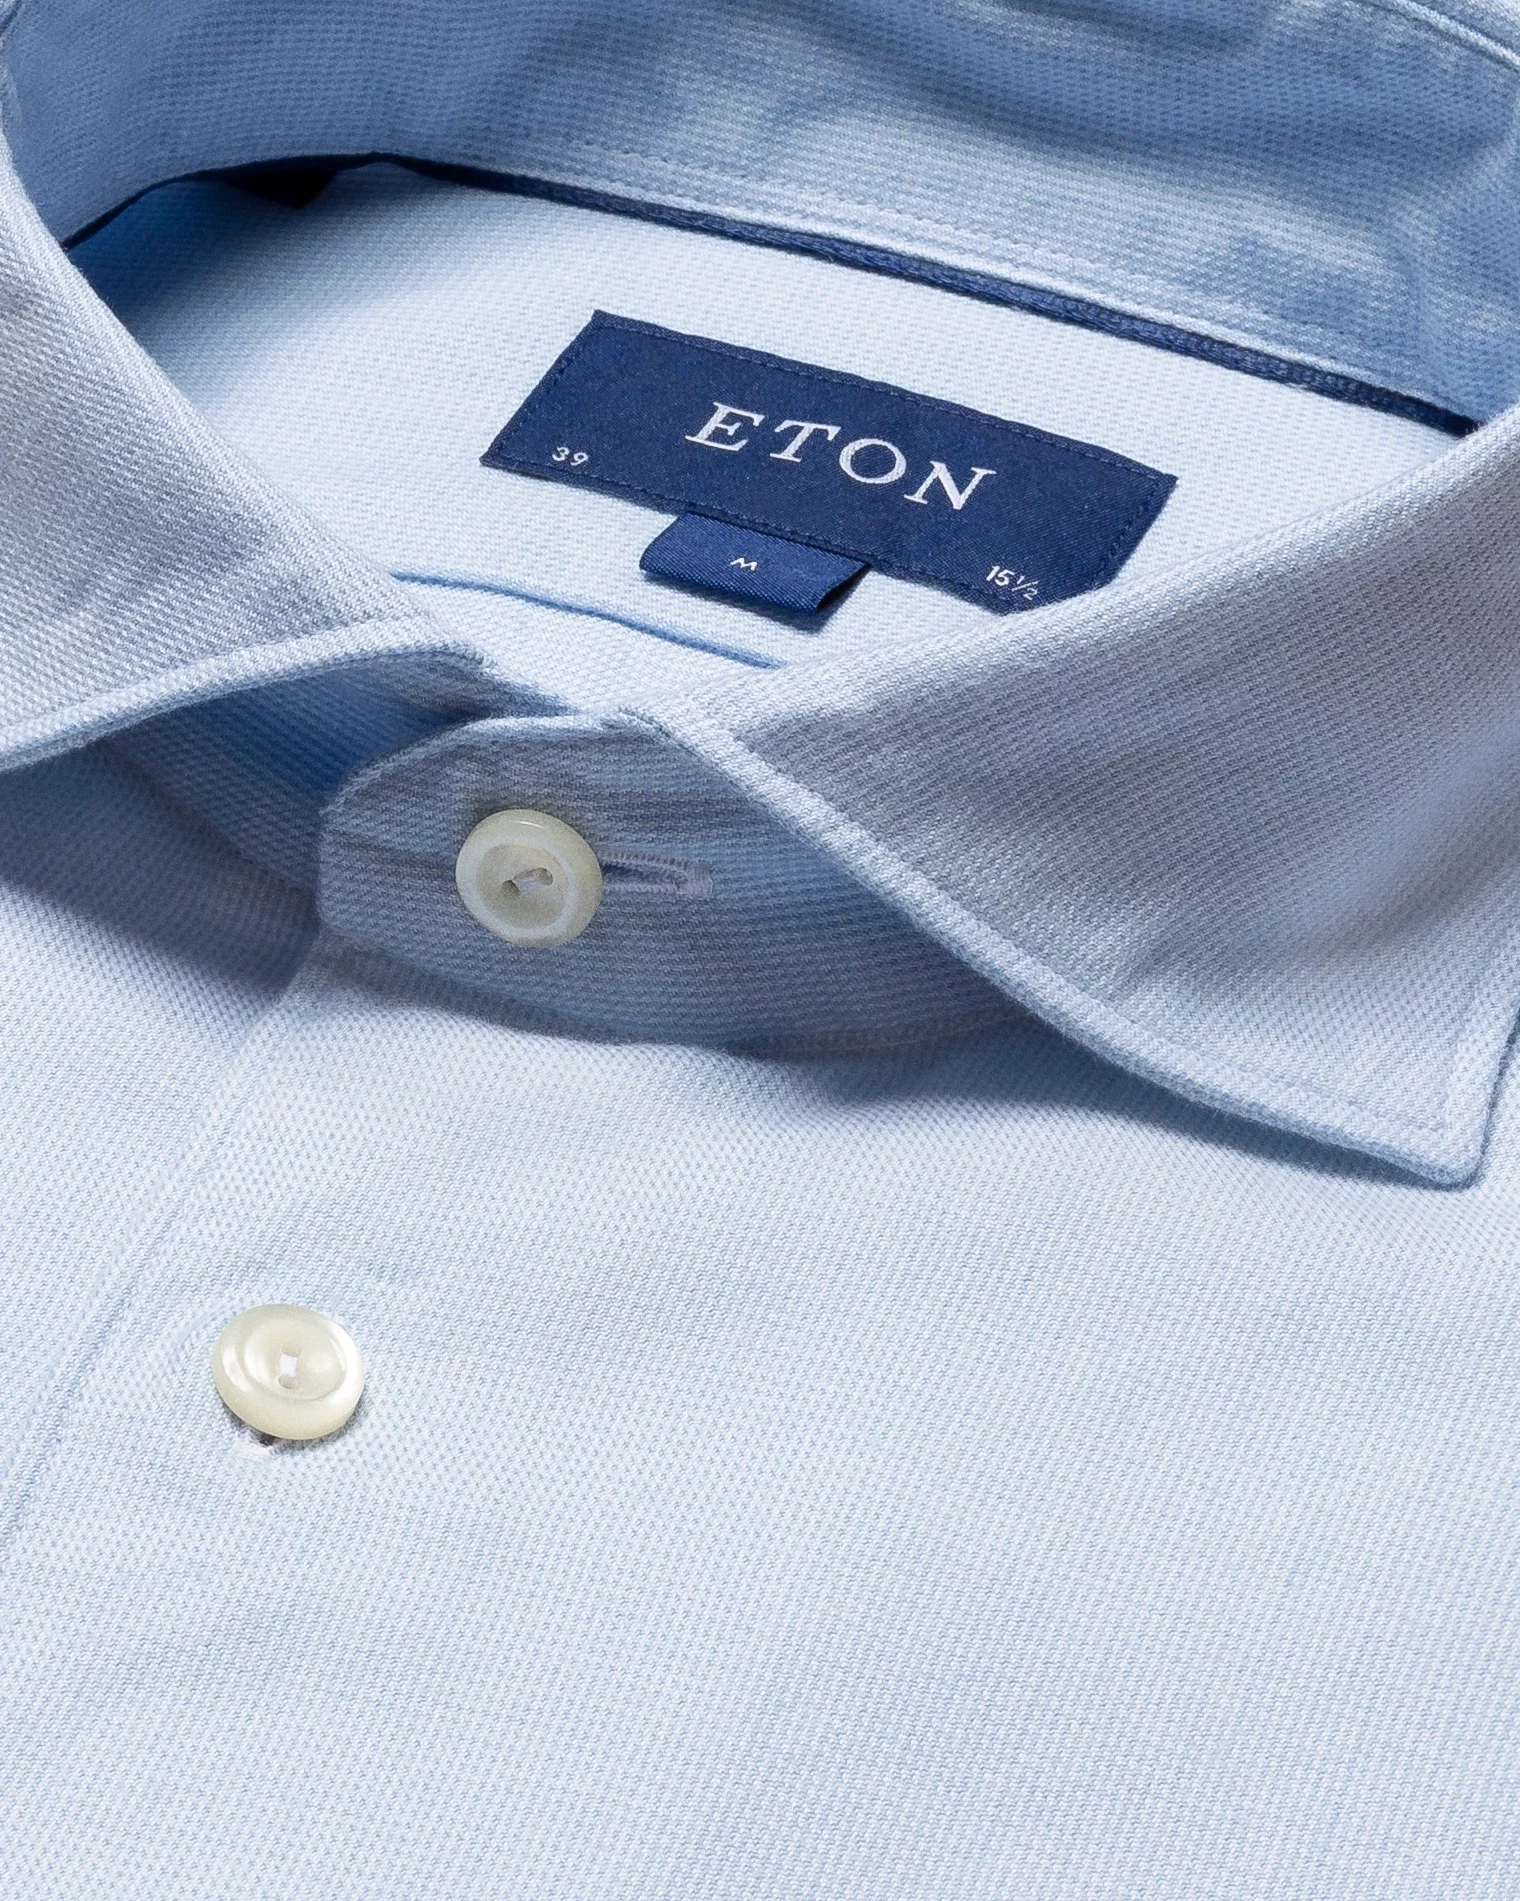 Eton - light blue cotton tencel tm flannel shirt